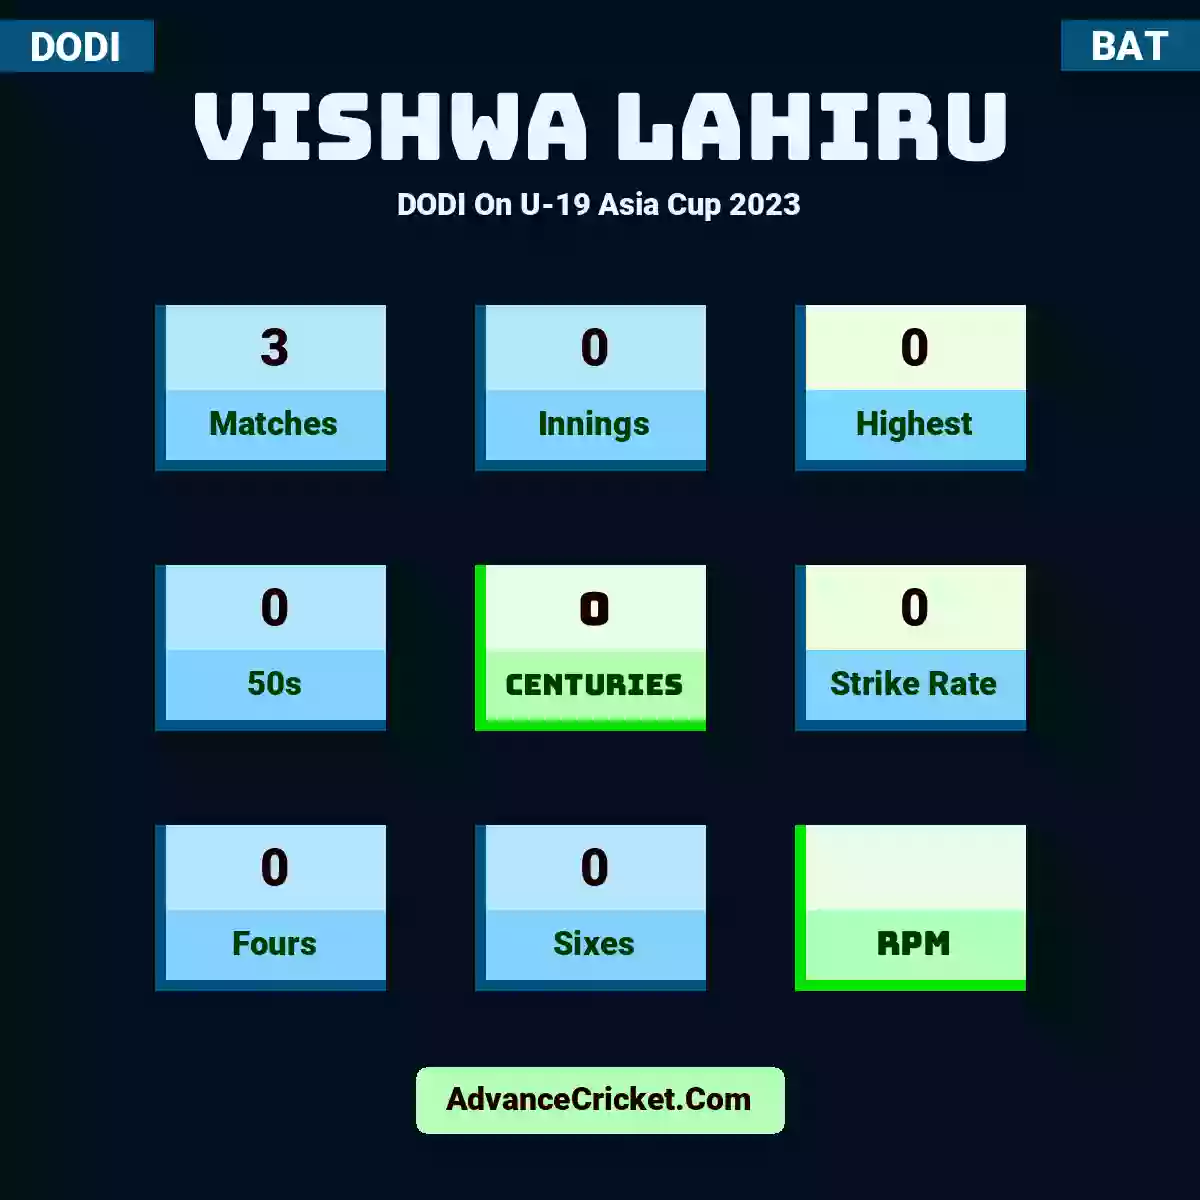 Vishwa Lahiru DODI  On U-19 Asia Cup 2023, Vishwa Lahiru played 3 matches, scored 0 runs as highest, 0 half-centuries, and 0 centuries, with a strike rate of 0. V.Lahiru hit 0 fours and 0 sixes.